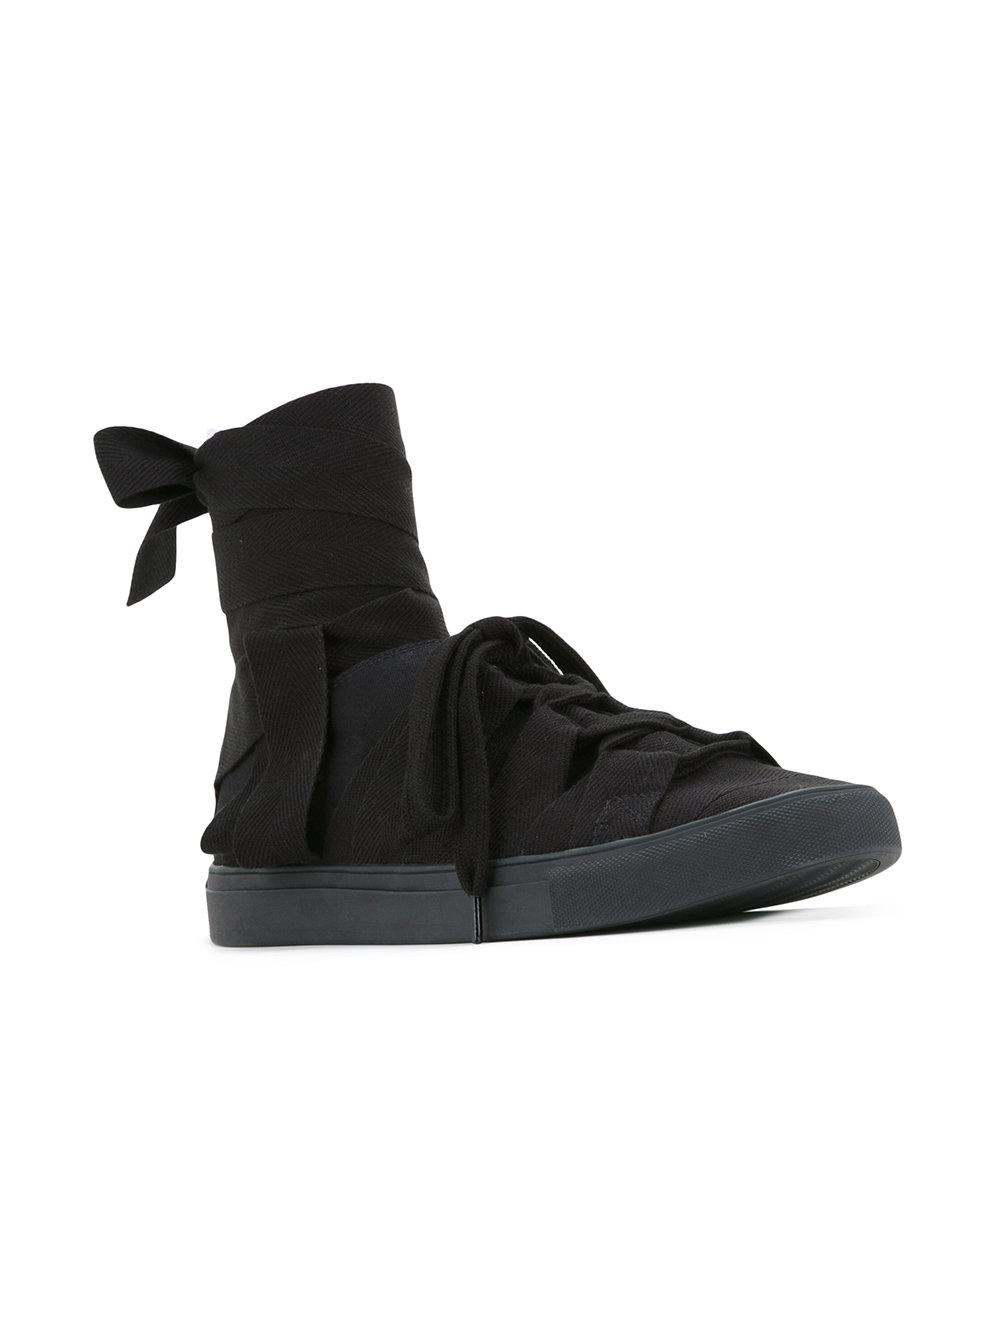 Yohji Yamamoto Tape Sneakers in Black for Men | Lyst